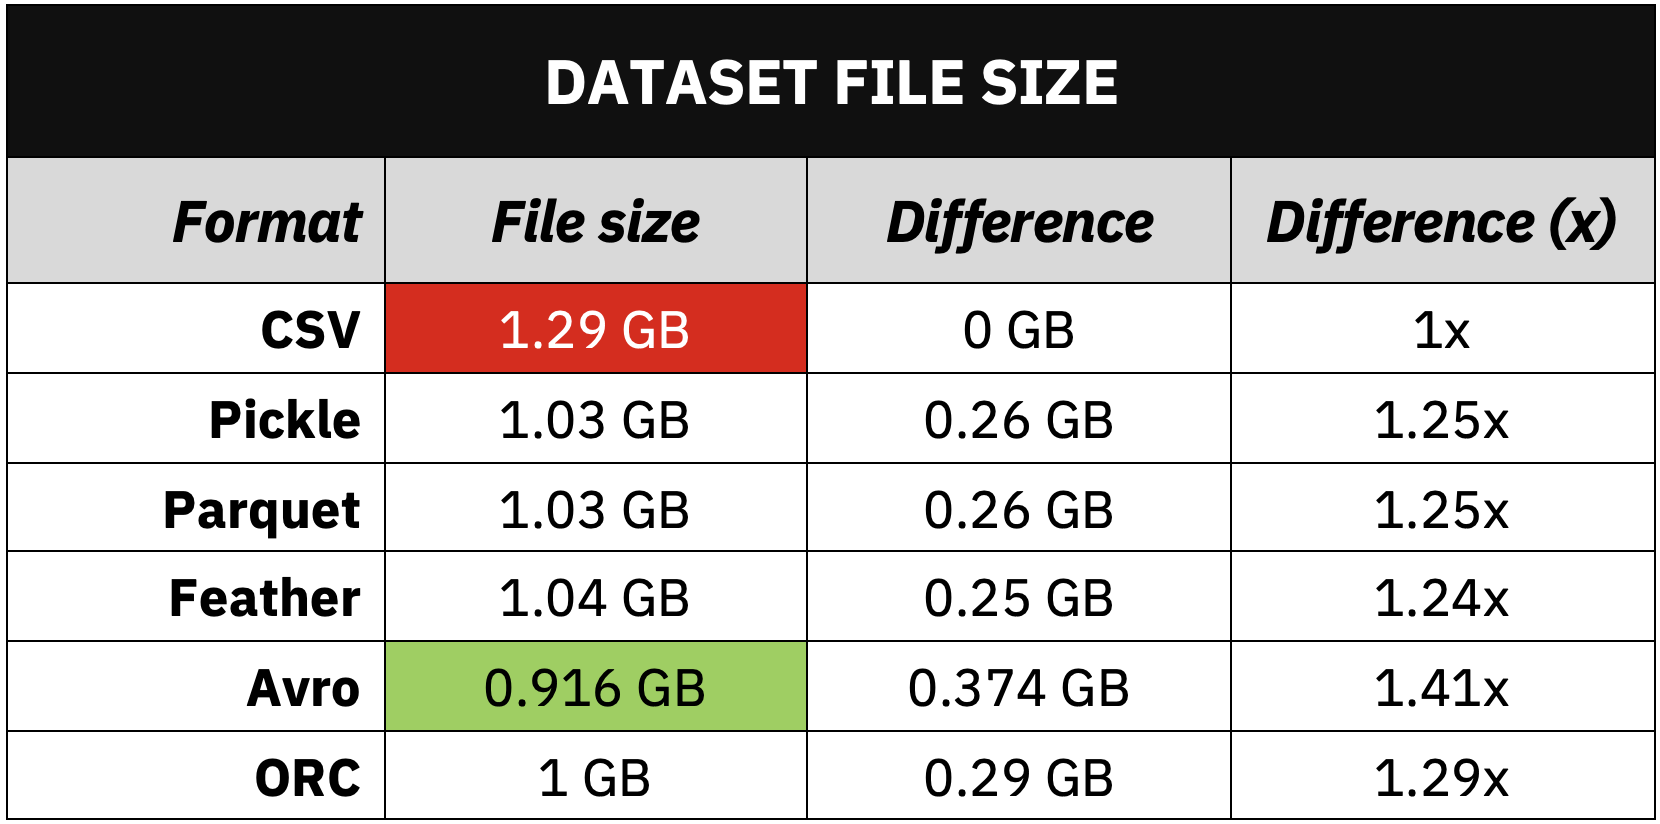 Image 4 - Dataset file size comparison (image by author)